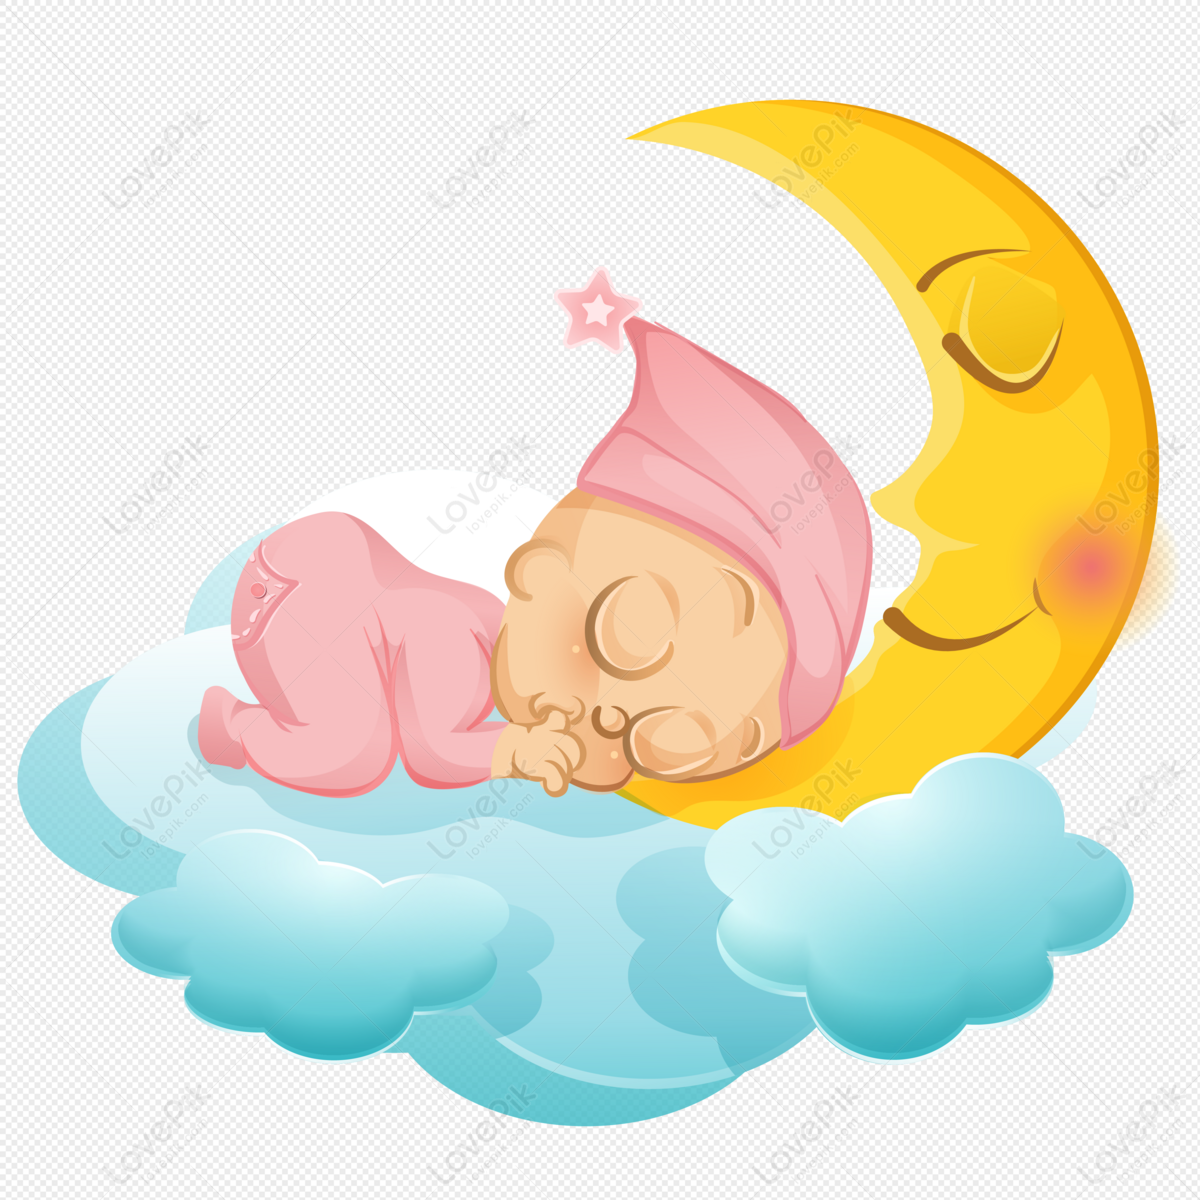 Sleeping baby, sleep, sleep concept, baby png transparent background